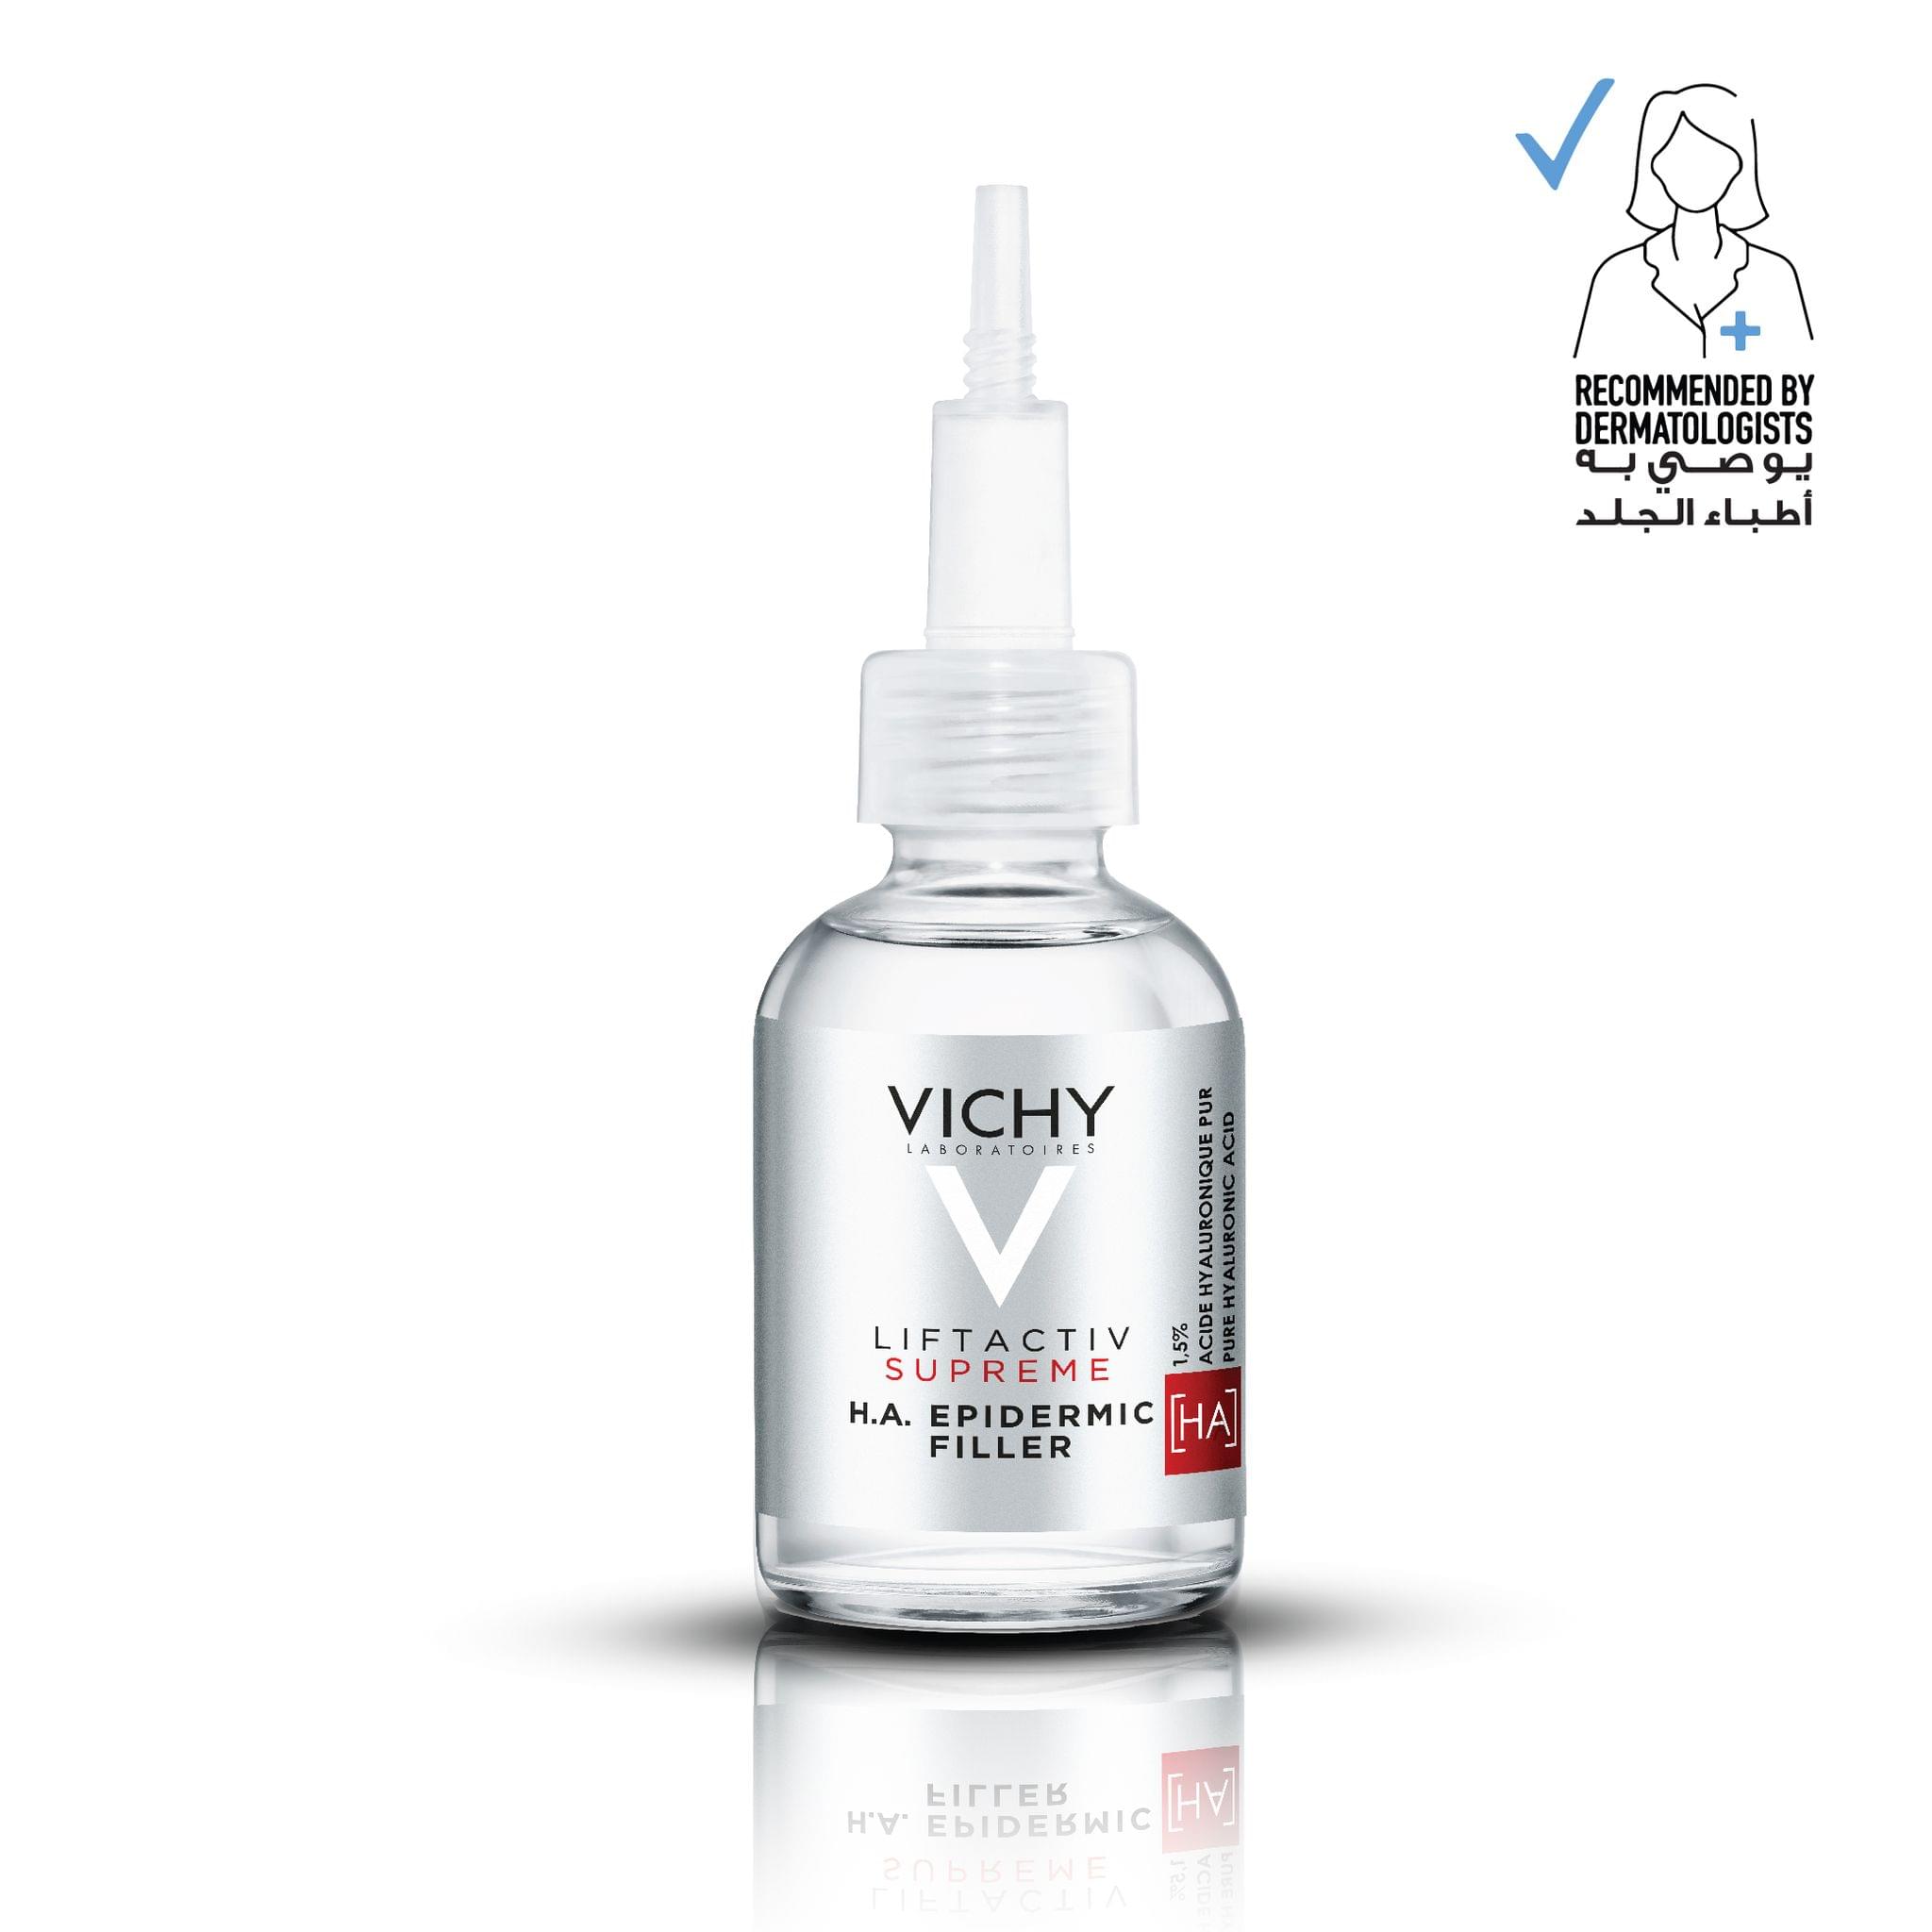 VICHY Liftactiv Supreme HA Filler Hyaluronic Acid Serum To Reduce Wrinkles & Fine Lines 30ml